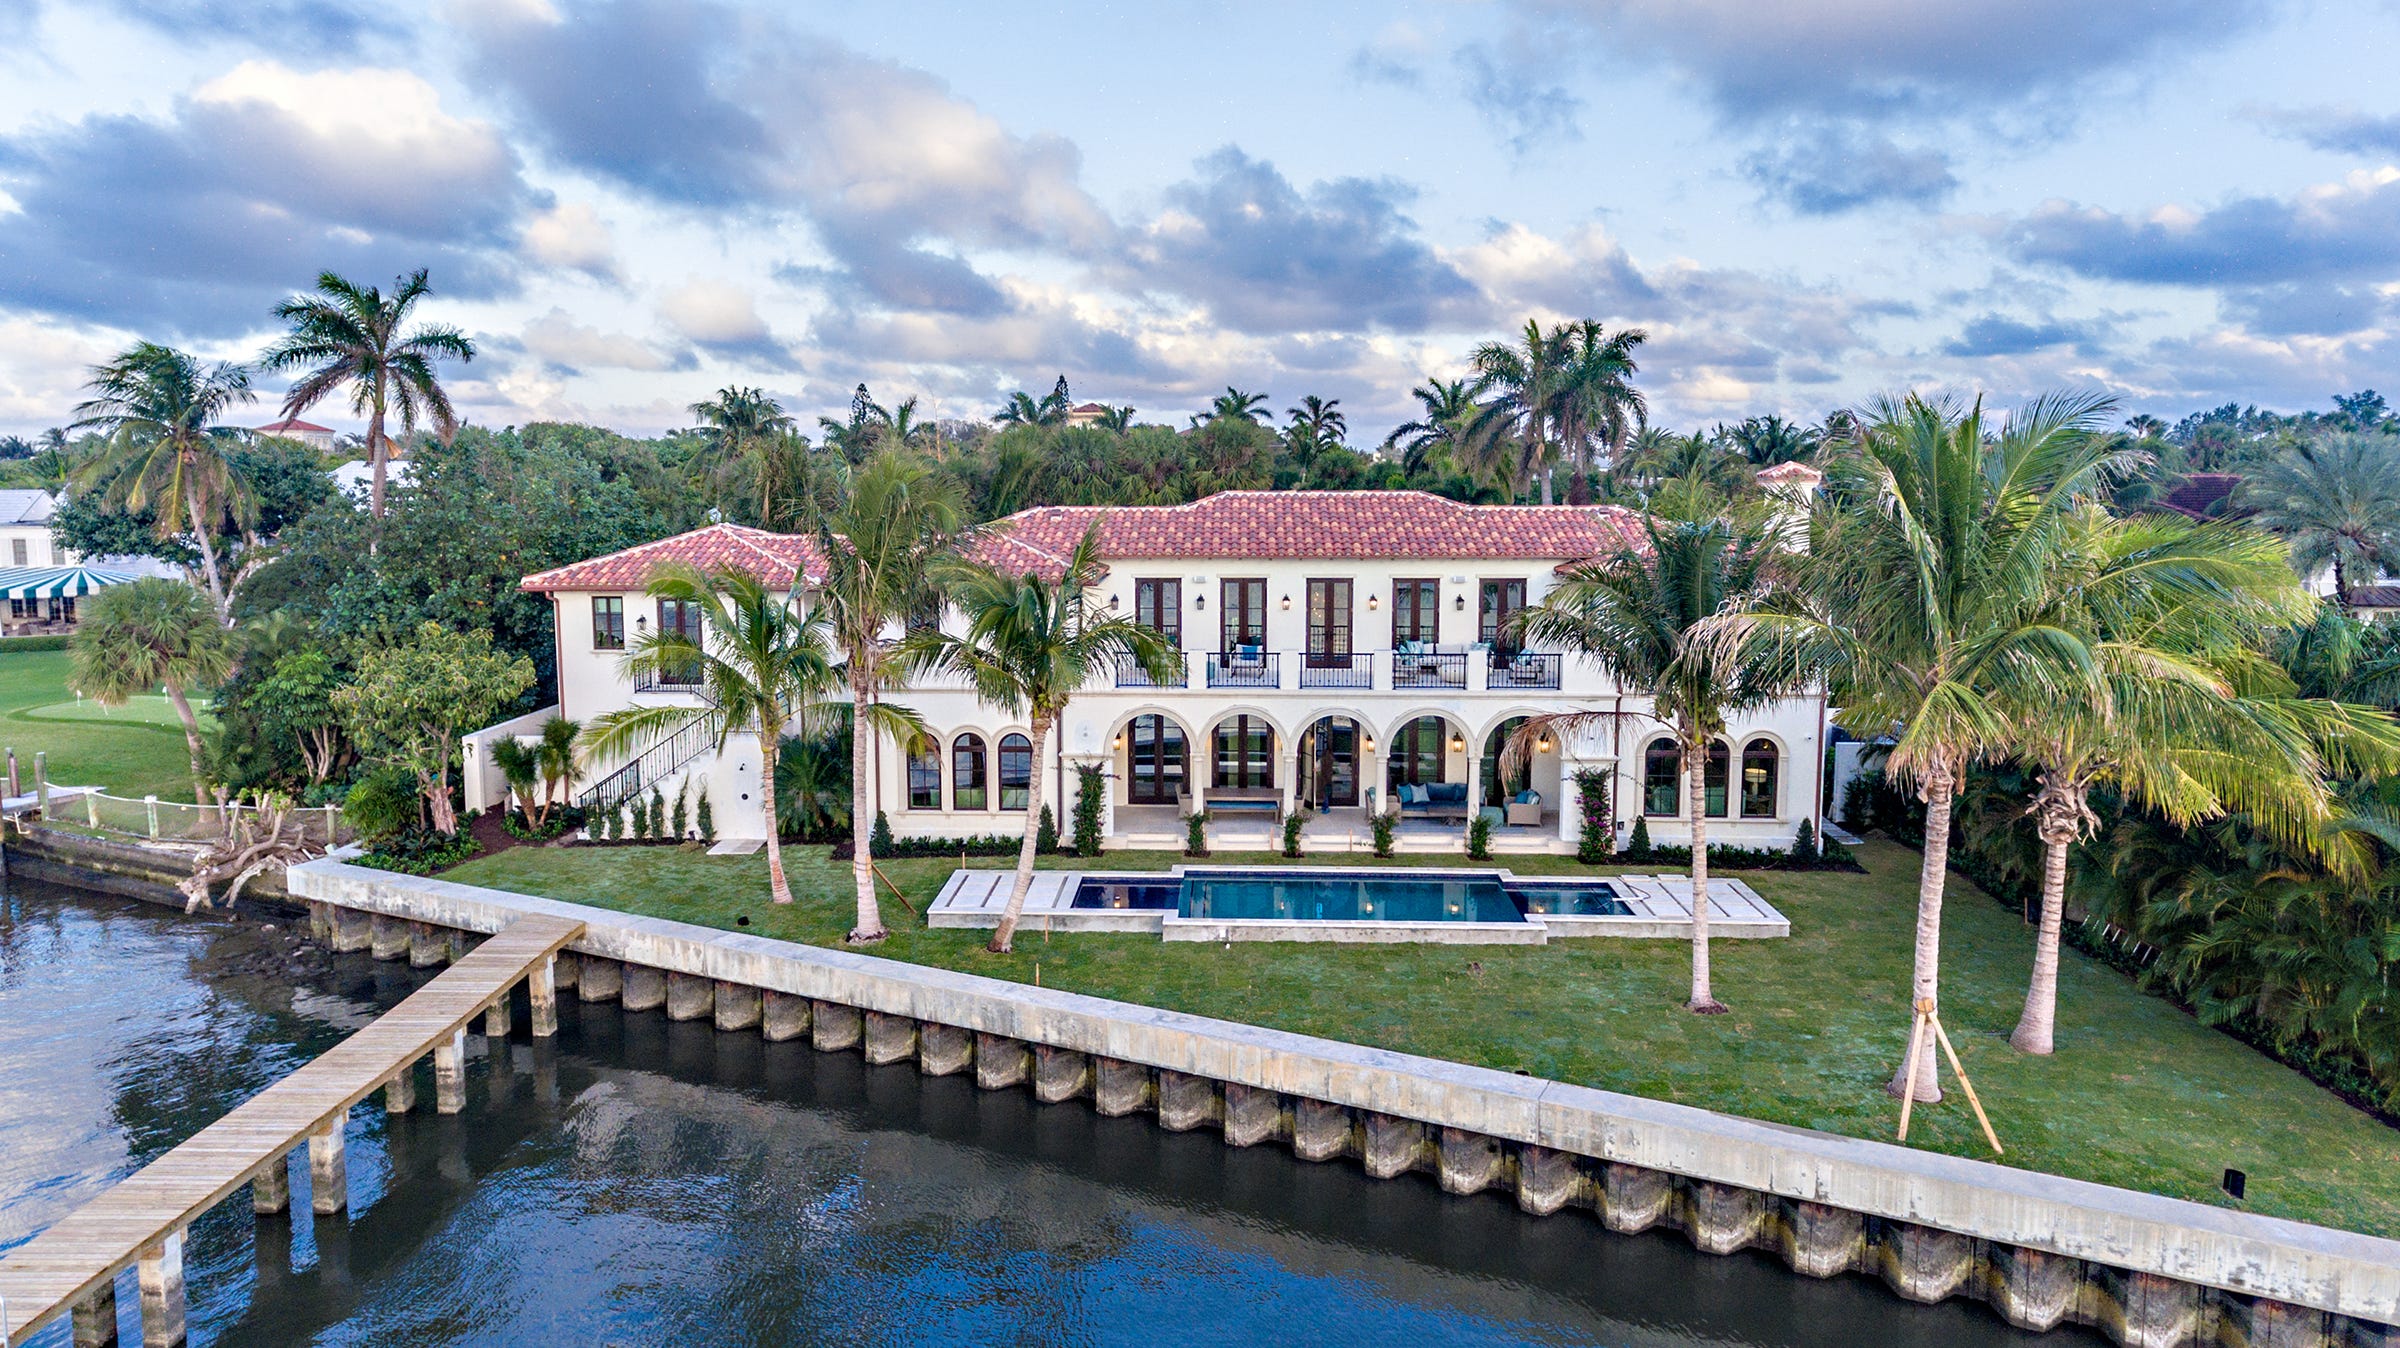 Steve Wynns New Line Flipping Mansions In Palm Beach Laptrinhx News